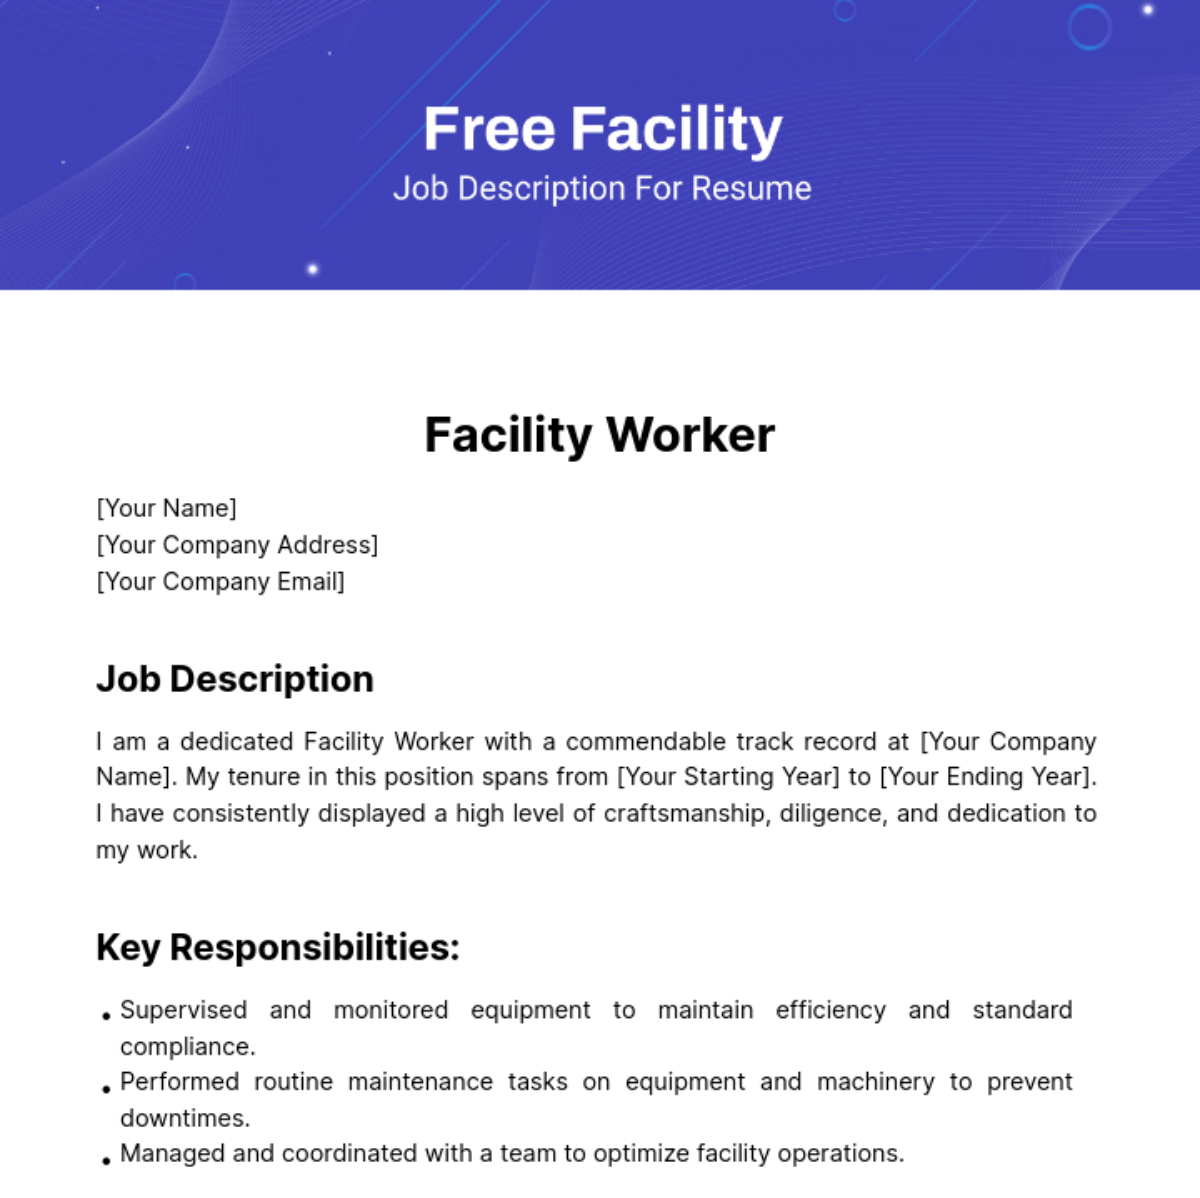 Free Facilities Job Description For Resume Template